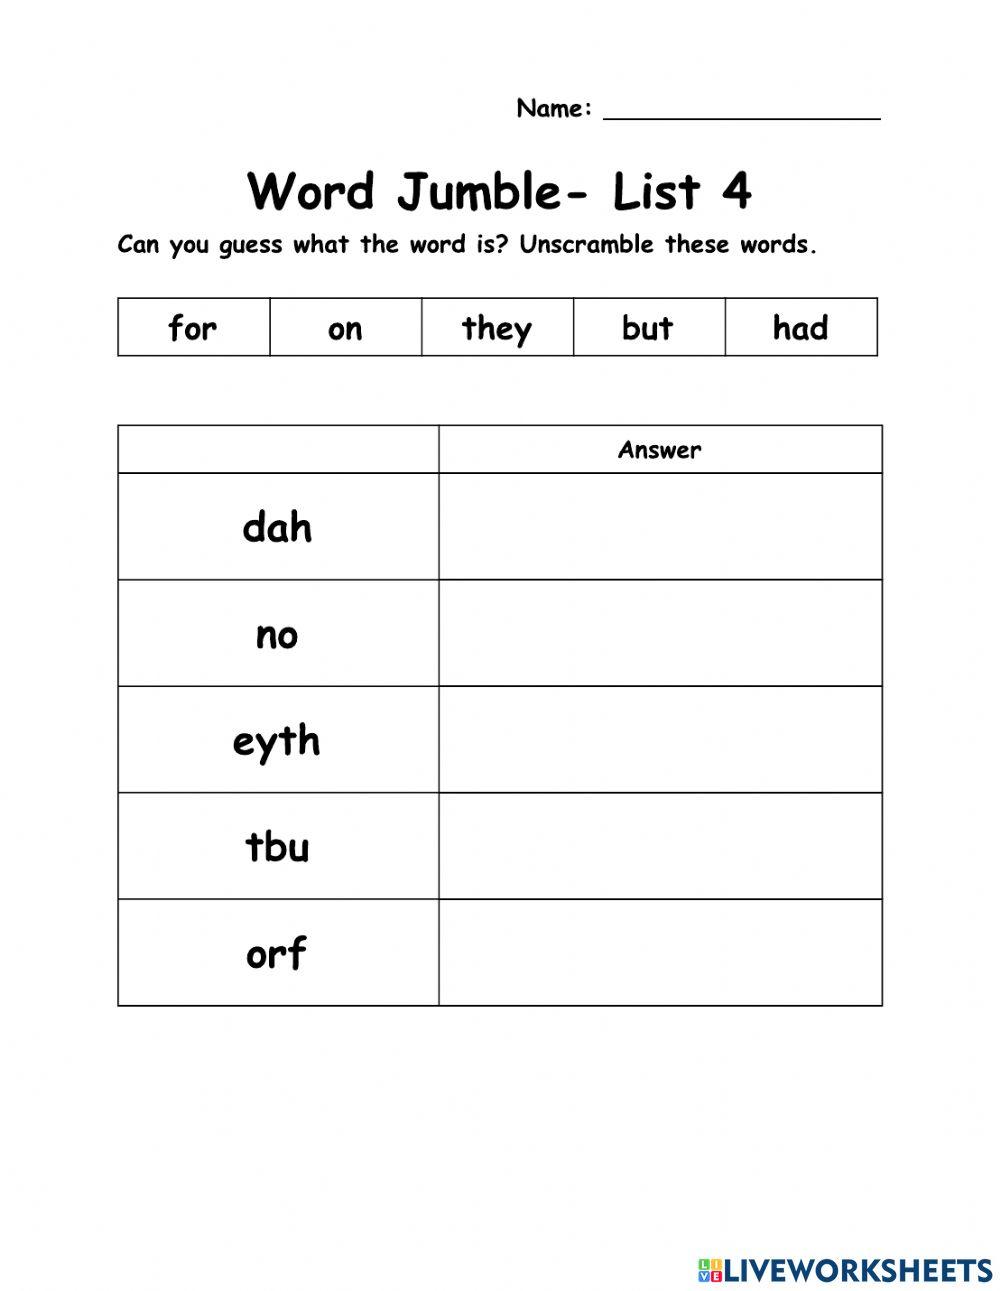 WOW - 5 Words - List 4 - Word Jumble